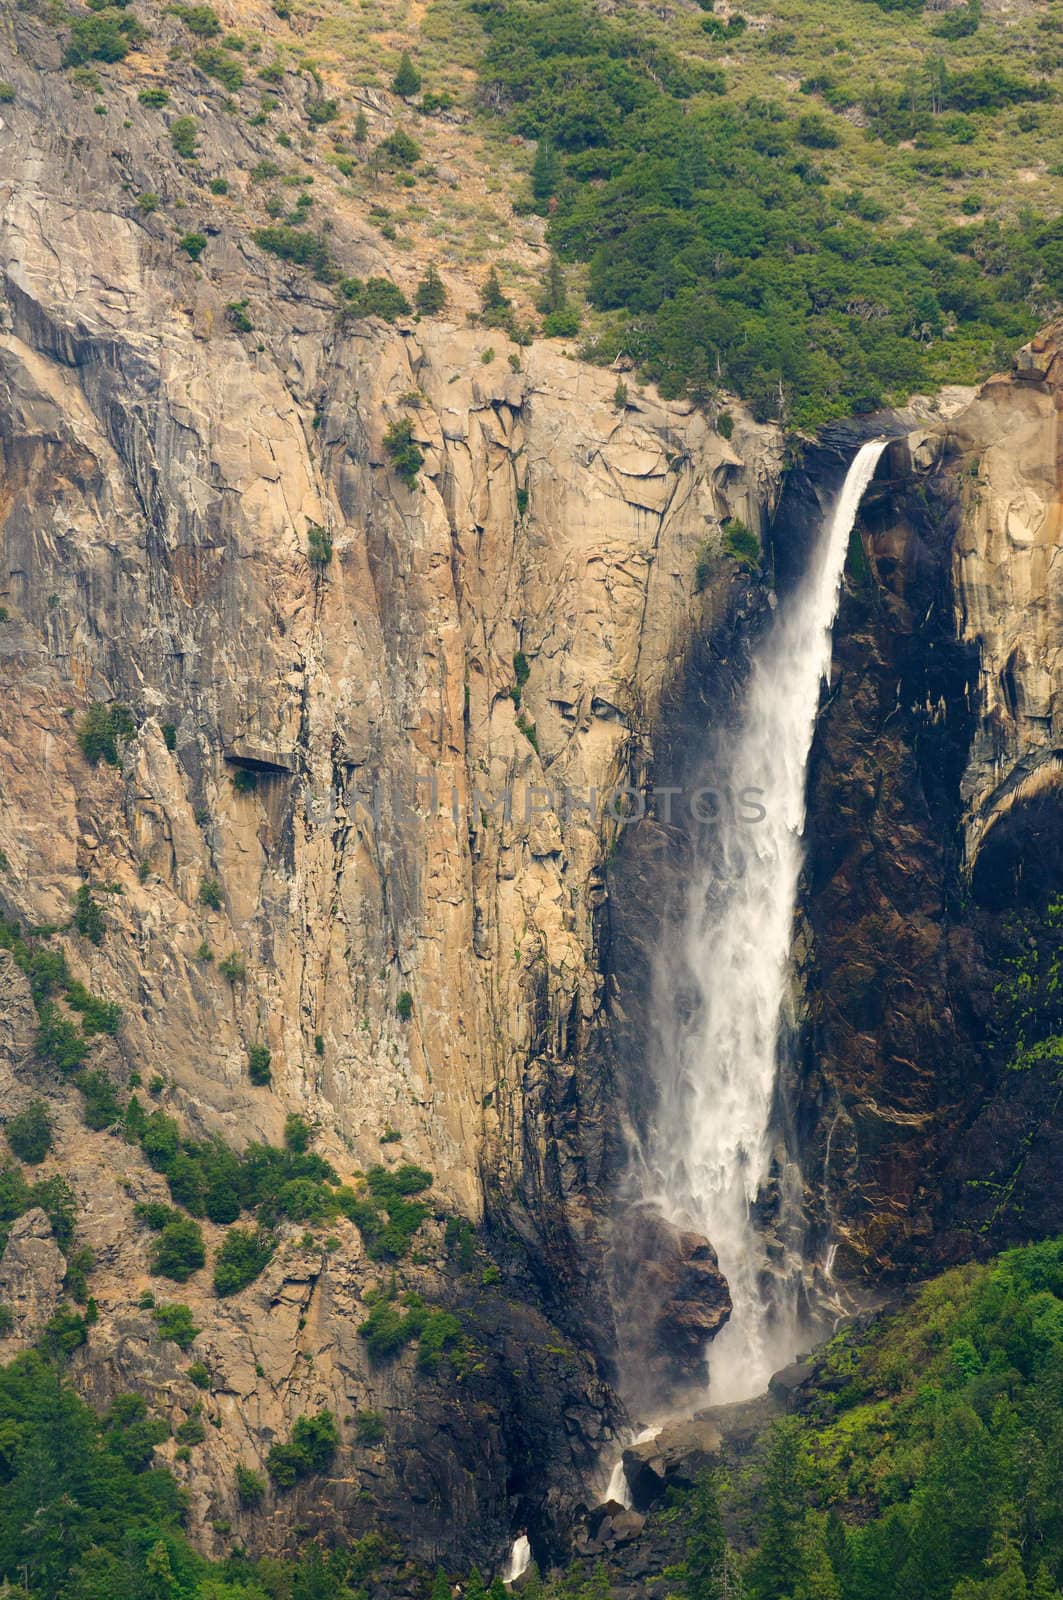 bridleveil falls, california by jeffbanke